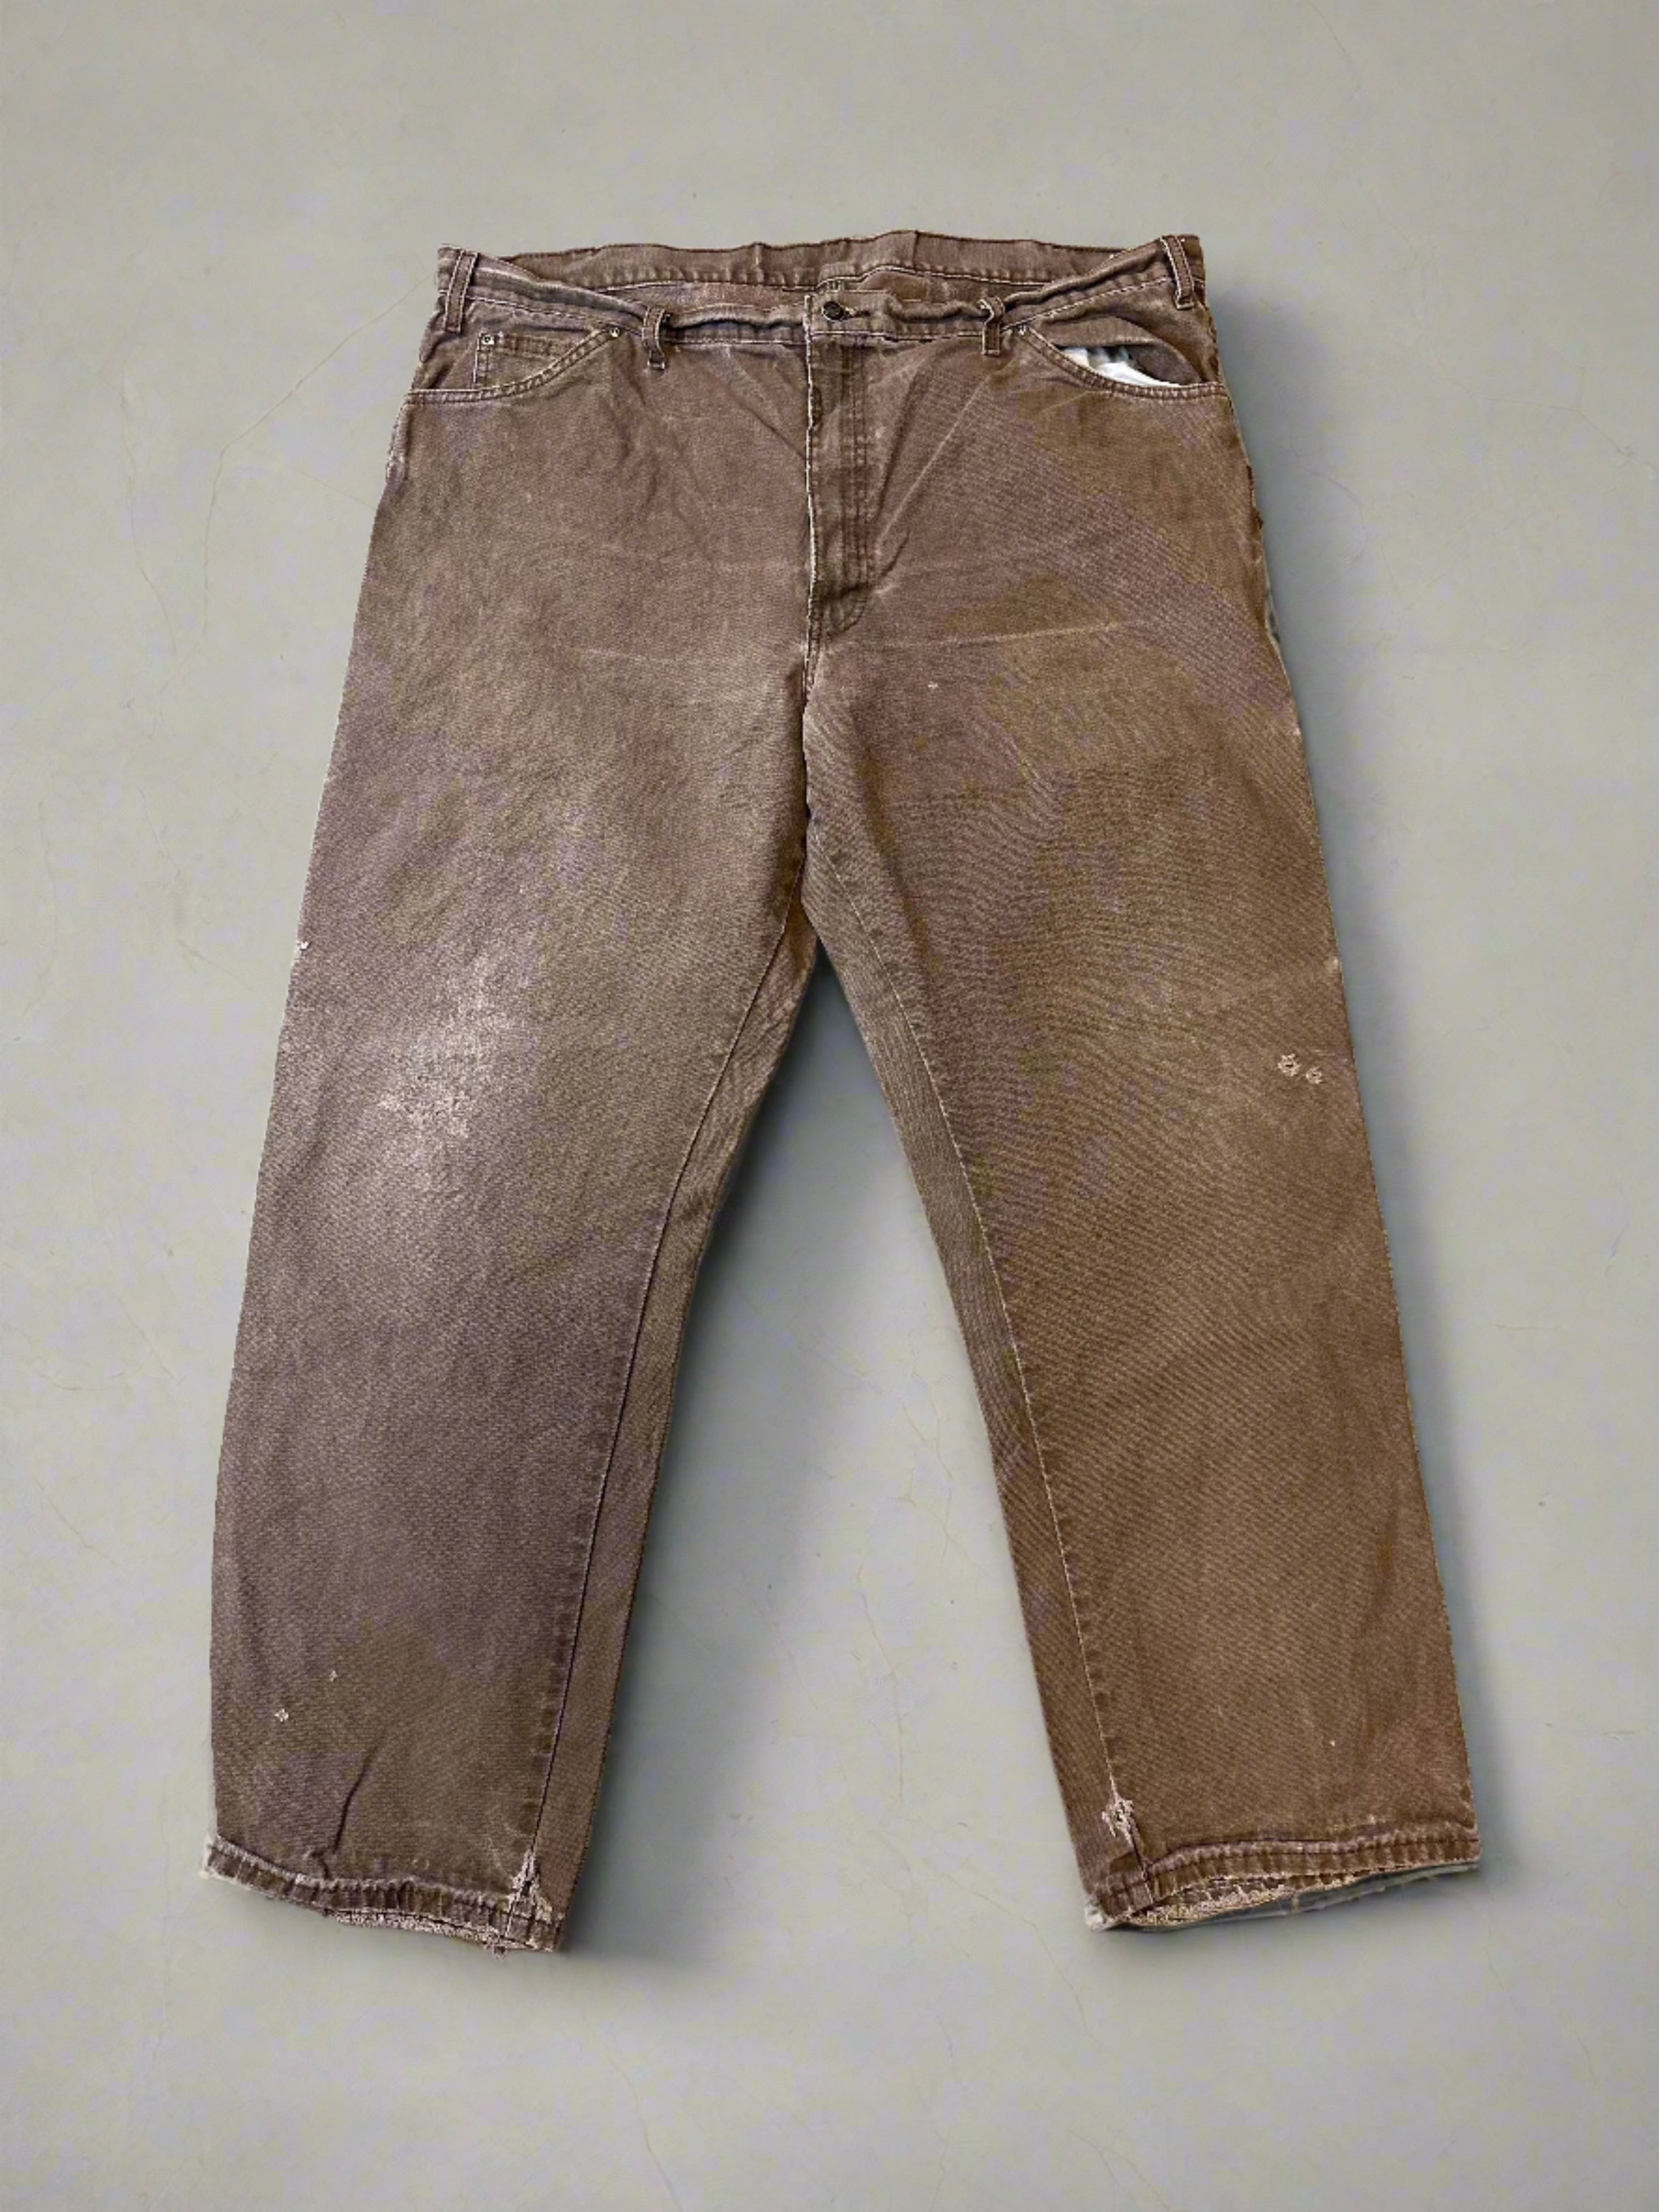 Vintage Dickies Carpenter Pants - size 42x32